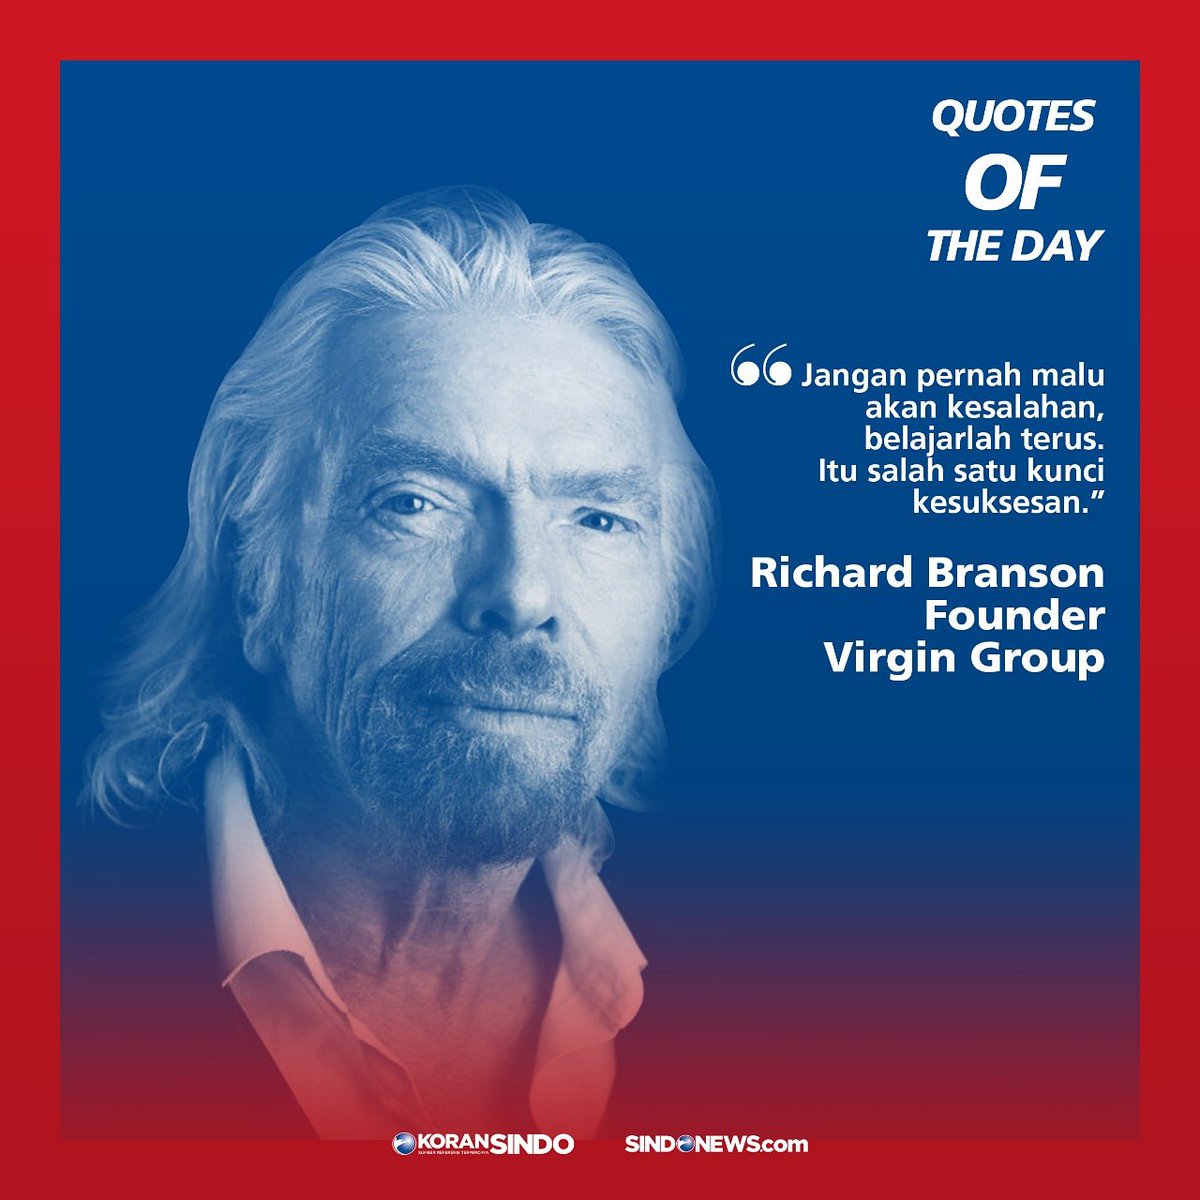 'Jangan pernah malu akan kesalahan, belajarlah terus. Itu salah satu kunci kesuksesan.' -Richard Branson

#sindoquote #motivasi #quoteoftheday #richardbranson #inspirasi #spirit